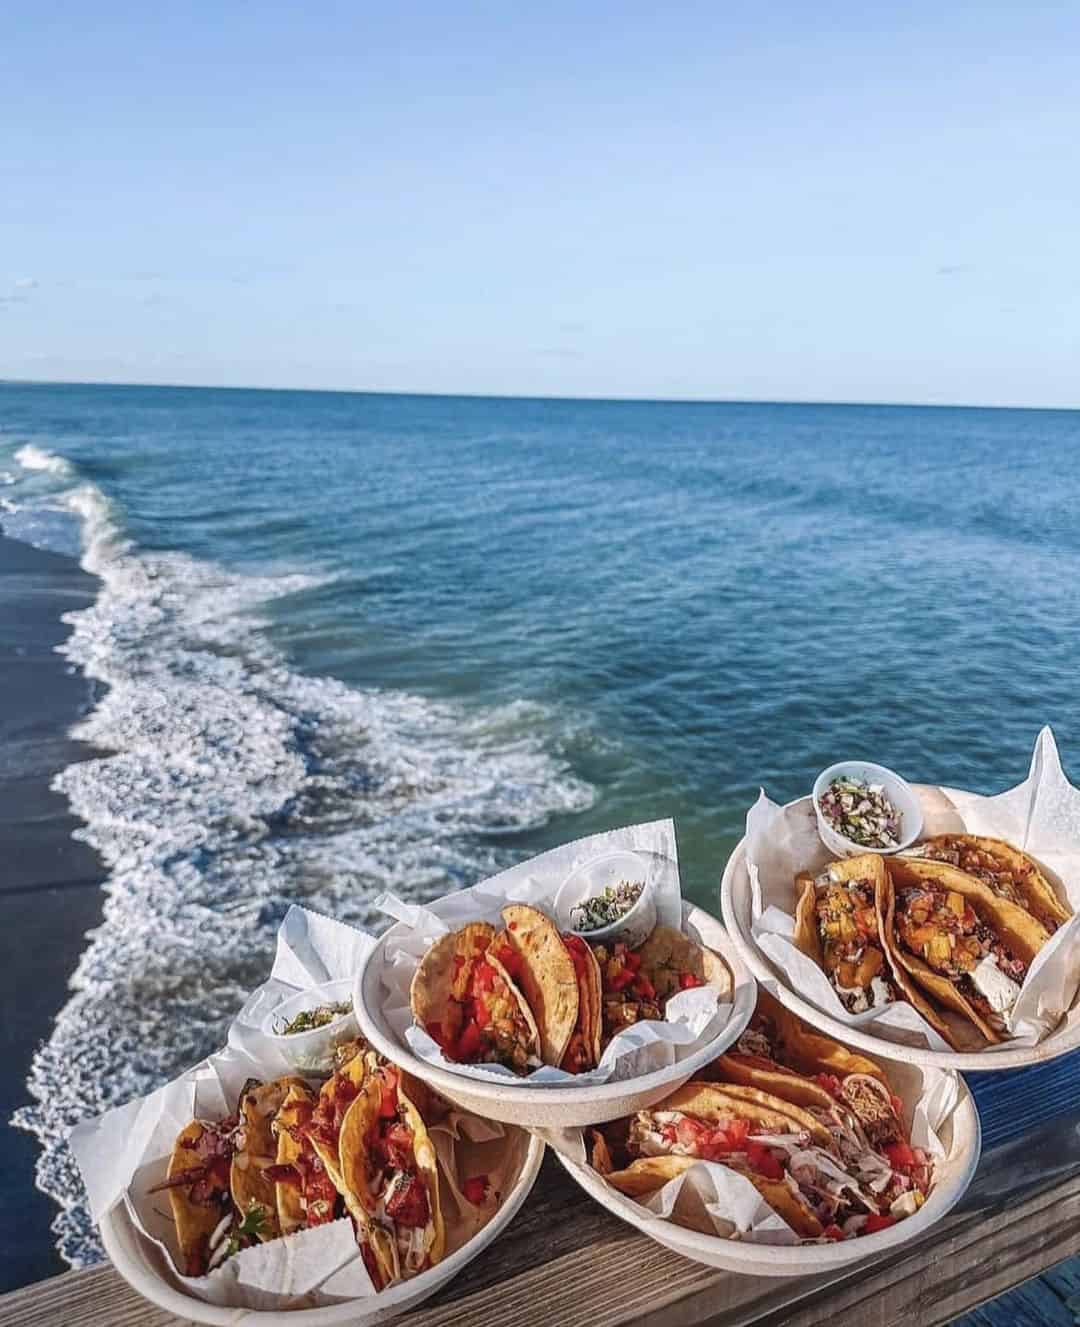 Enjoy tacos with the whole family at the Carolina Beach Pier restaurant and tiki bar